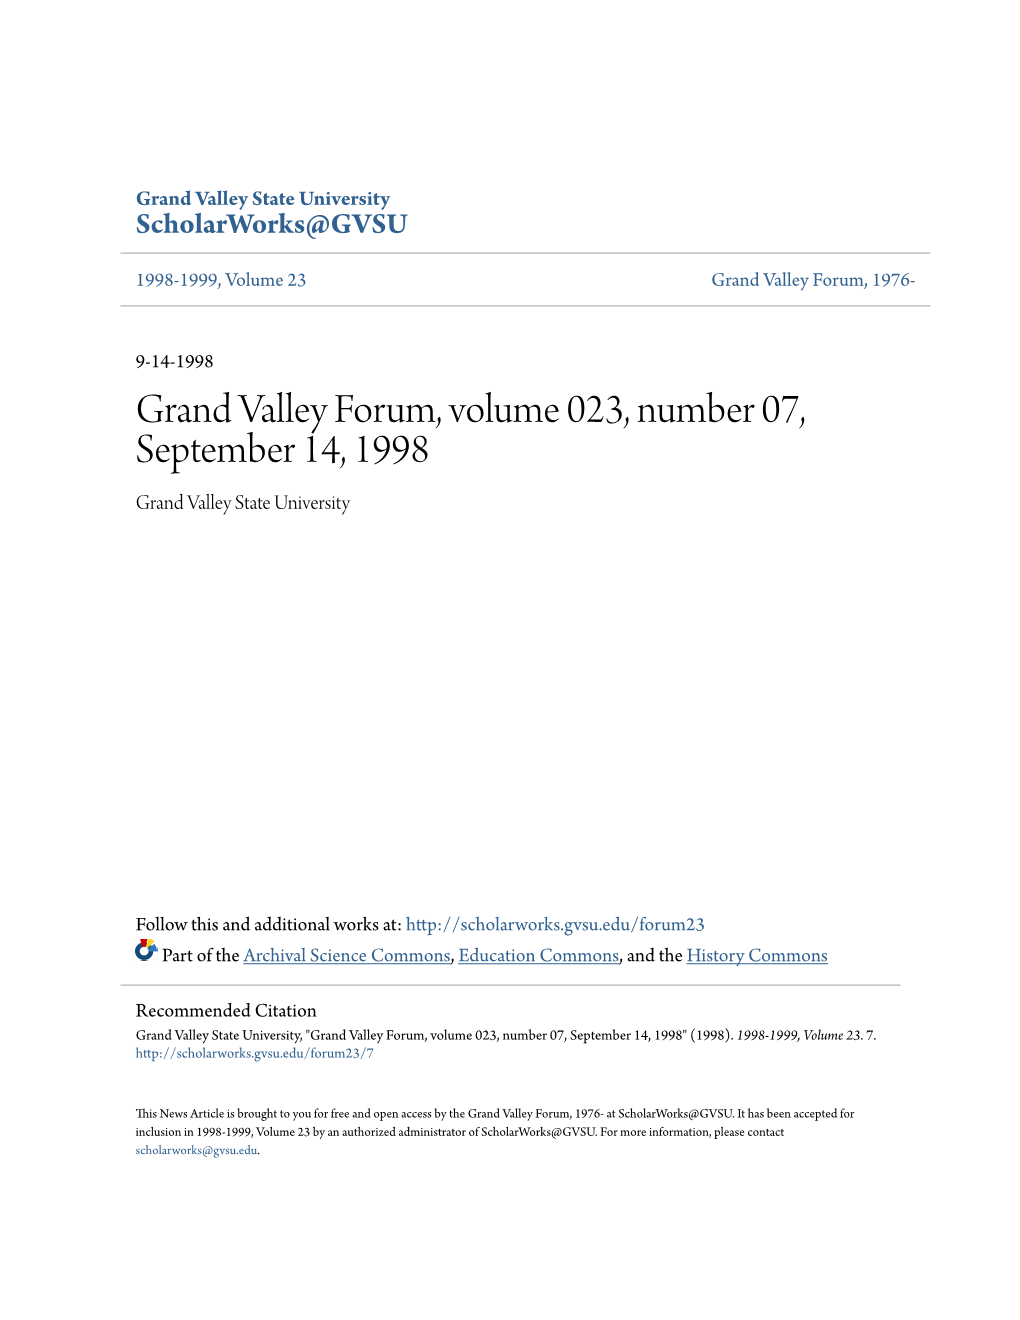 Grand Valley Forum, Volume 023, Number 07, September 14, 1998 Grand Valley State University